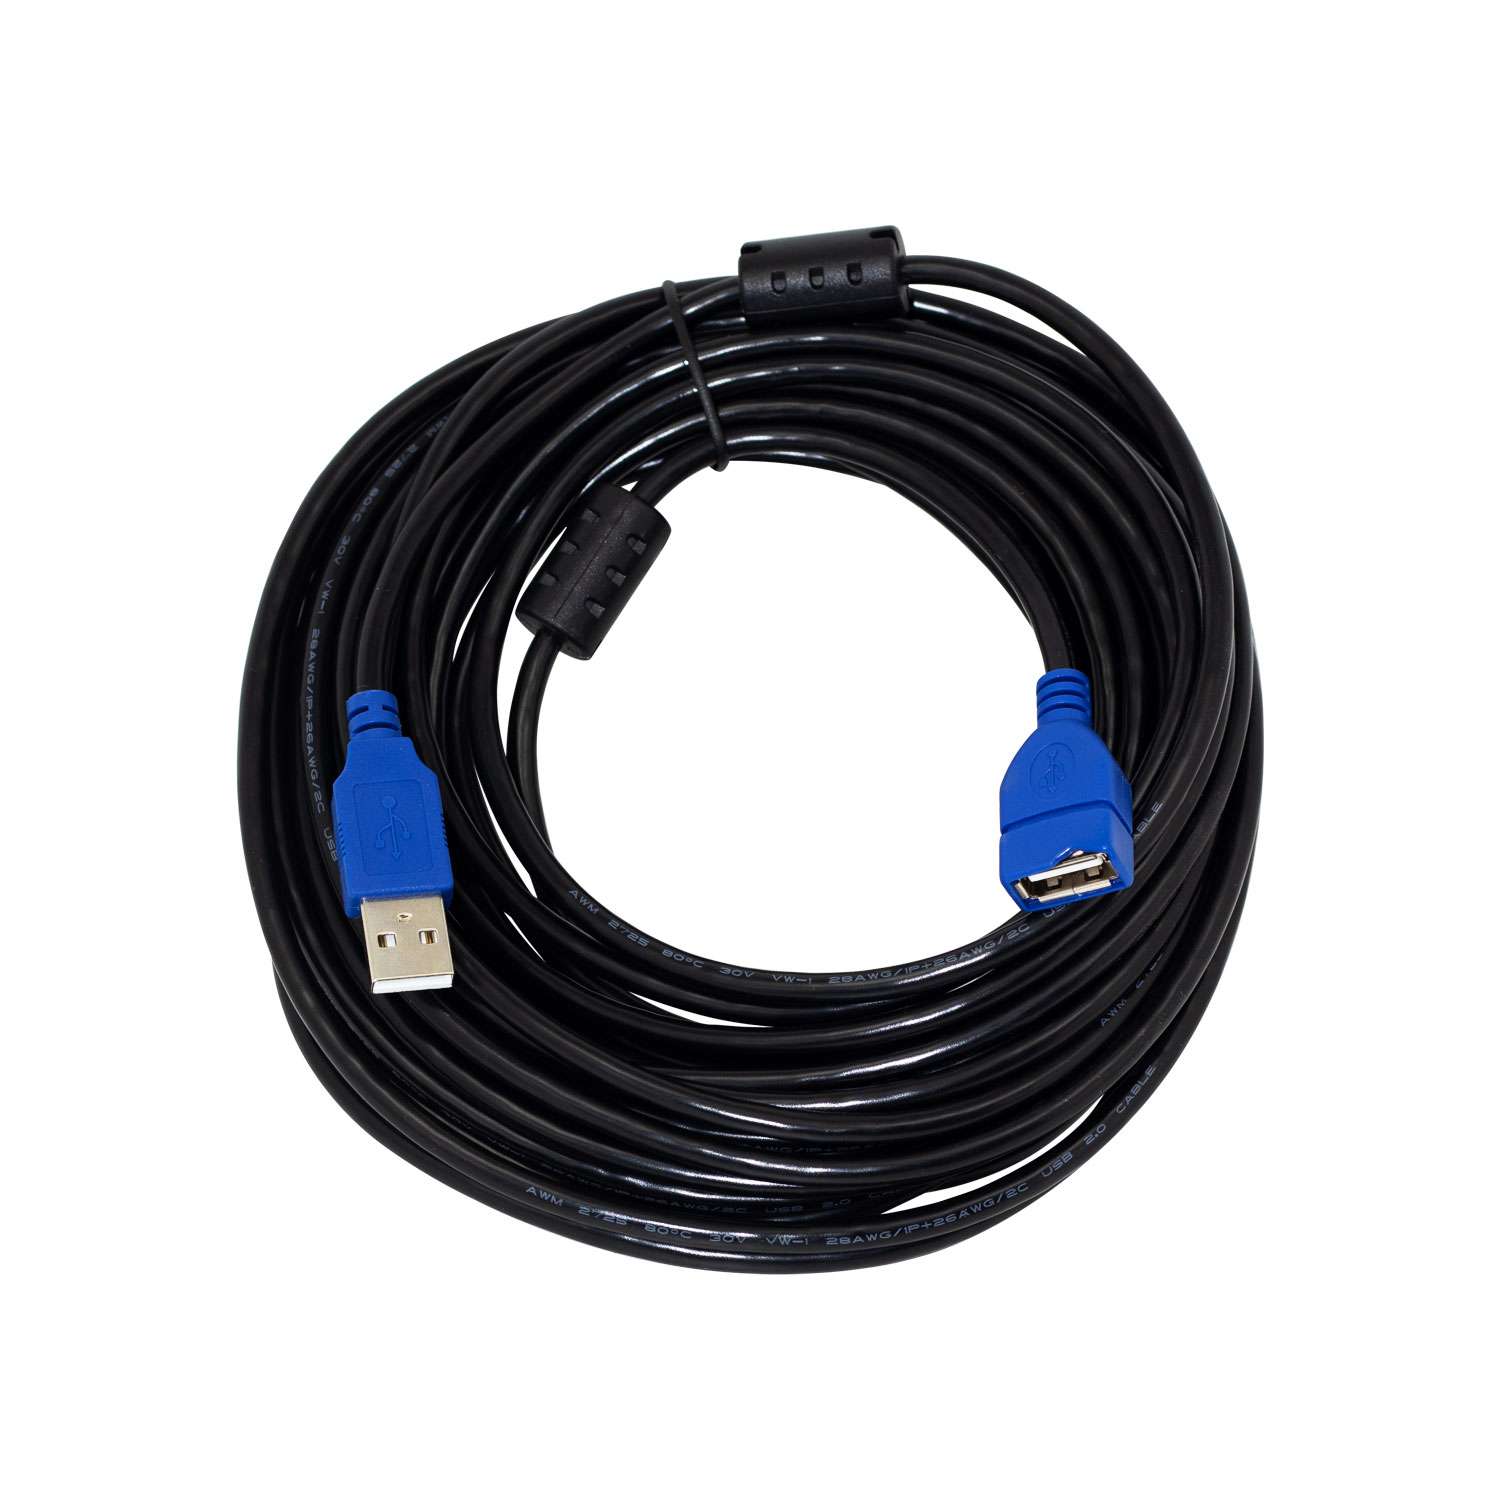 Cable Usb 2.0 Macho A Hembra Para Disco Duro 10M Cable USB